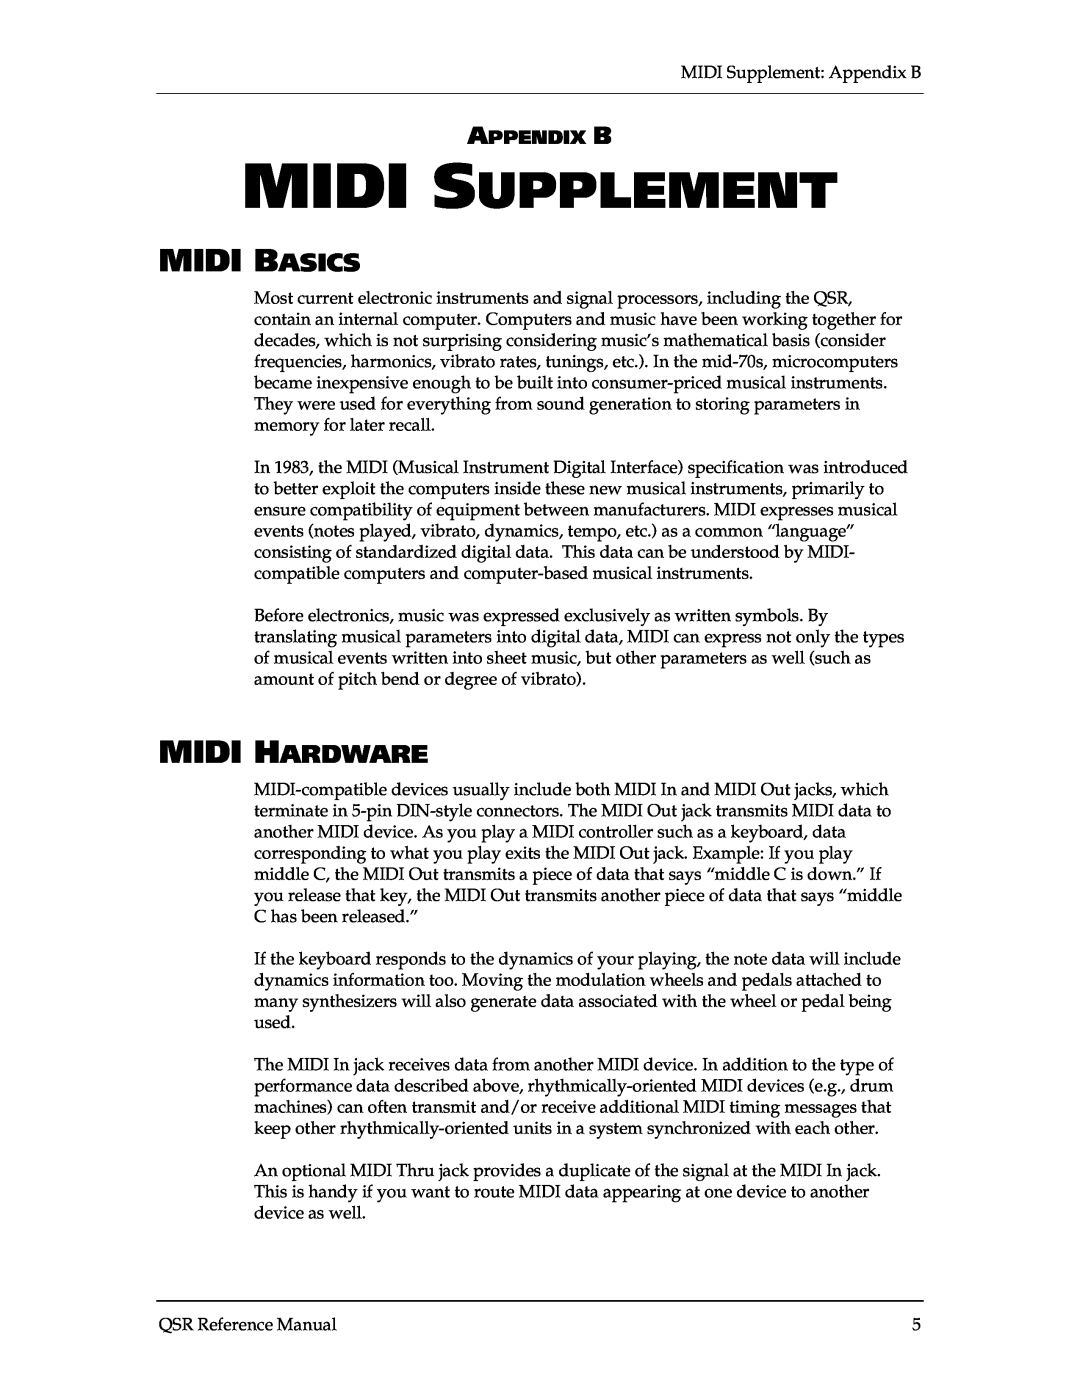 Alesis QSR 64 manual Midi Supplement, Midi Basics, Midi Hardware, Appendix B 